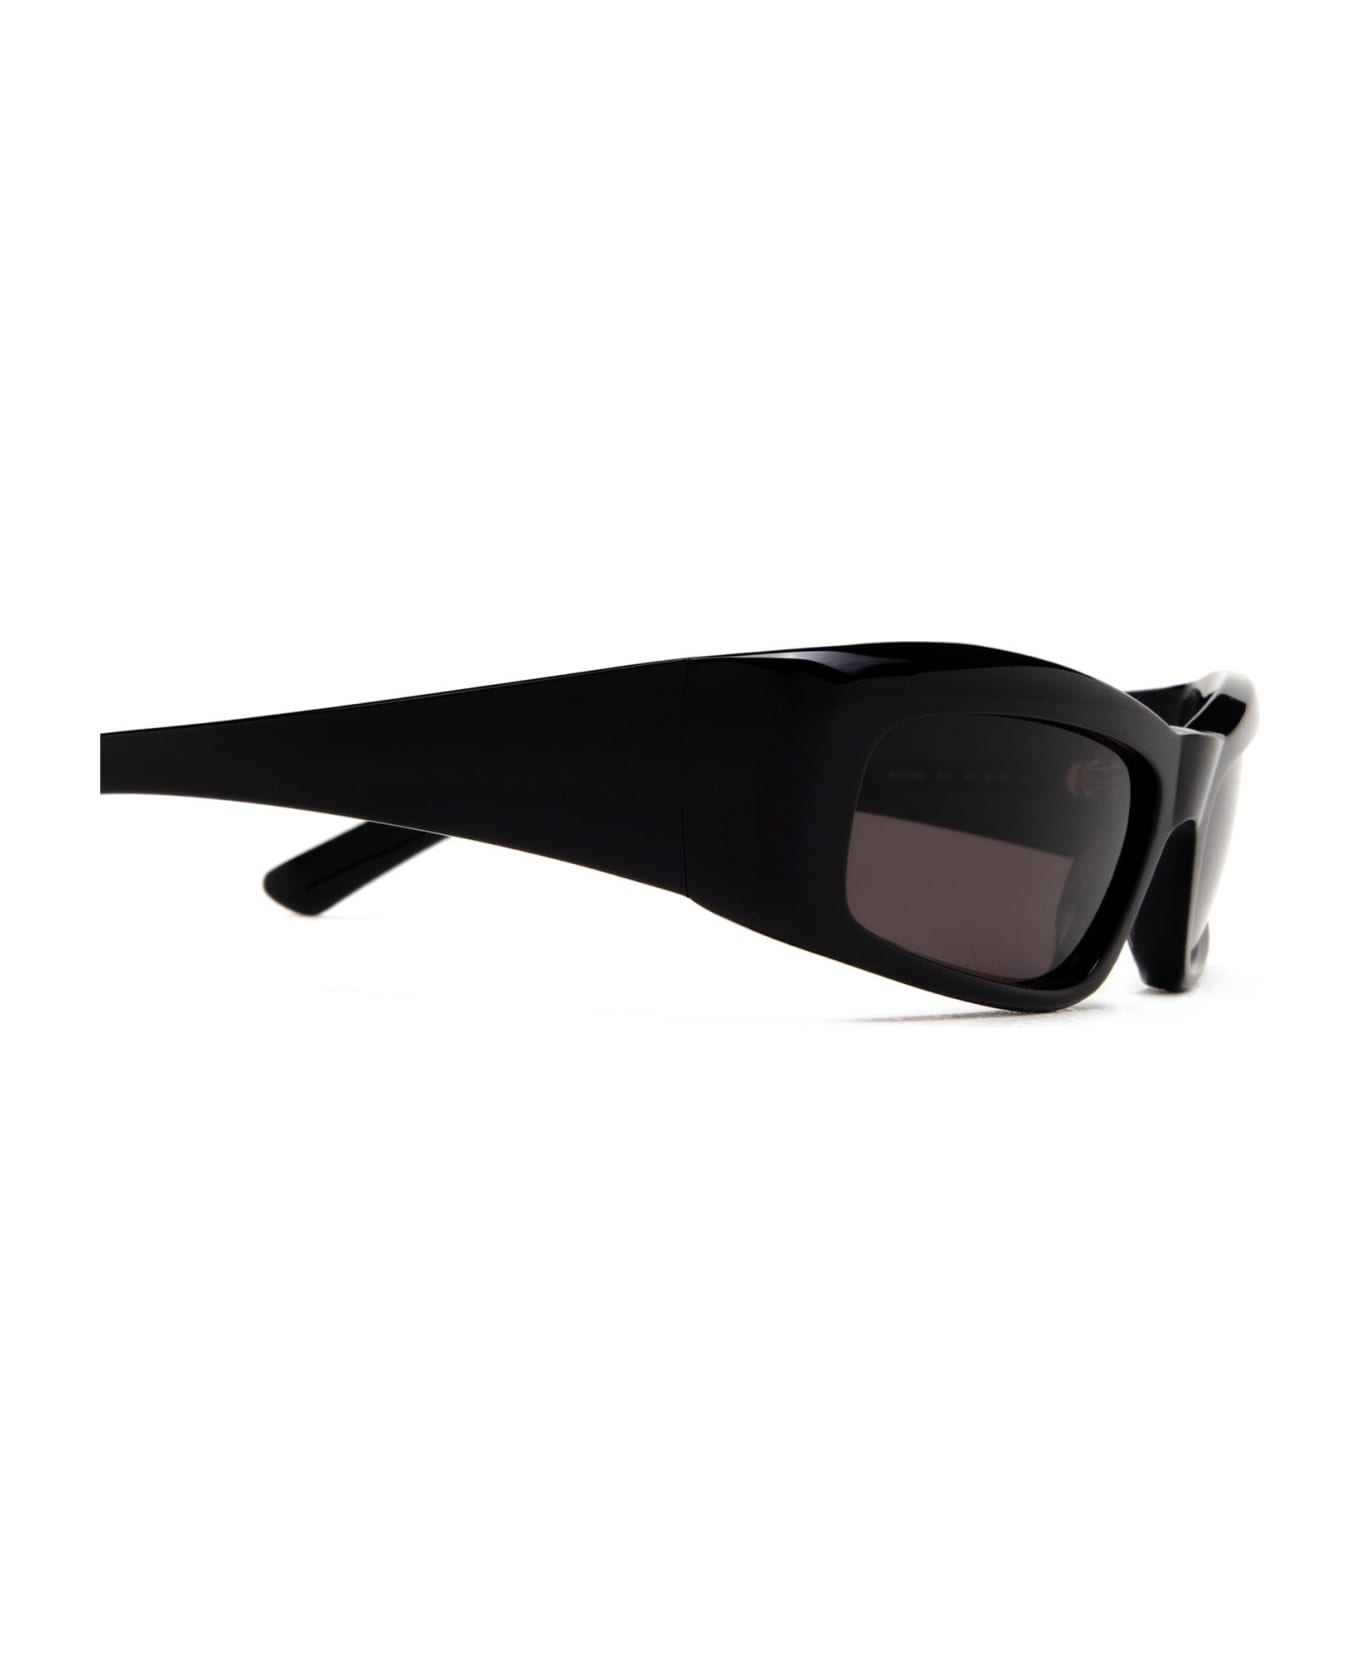 Balenciaga Eyewear Logo Detail Rectangular Lens Sunglasses - 001 BLACK BLACK GREY